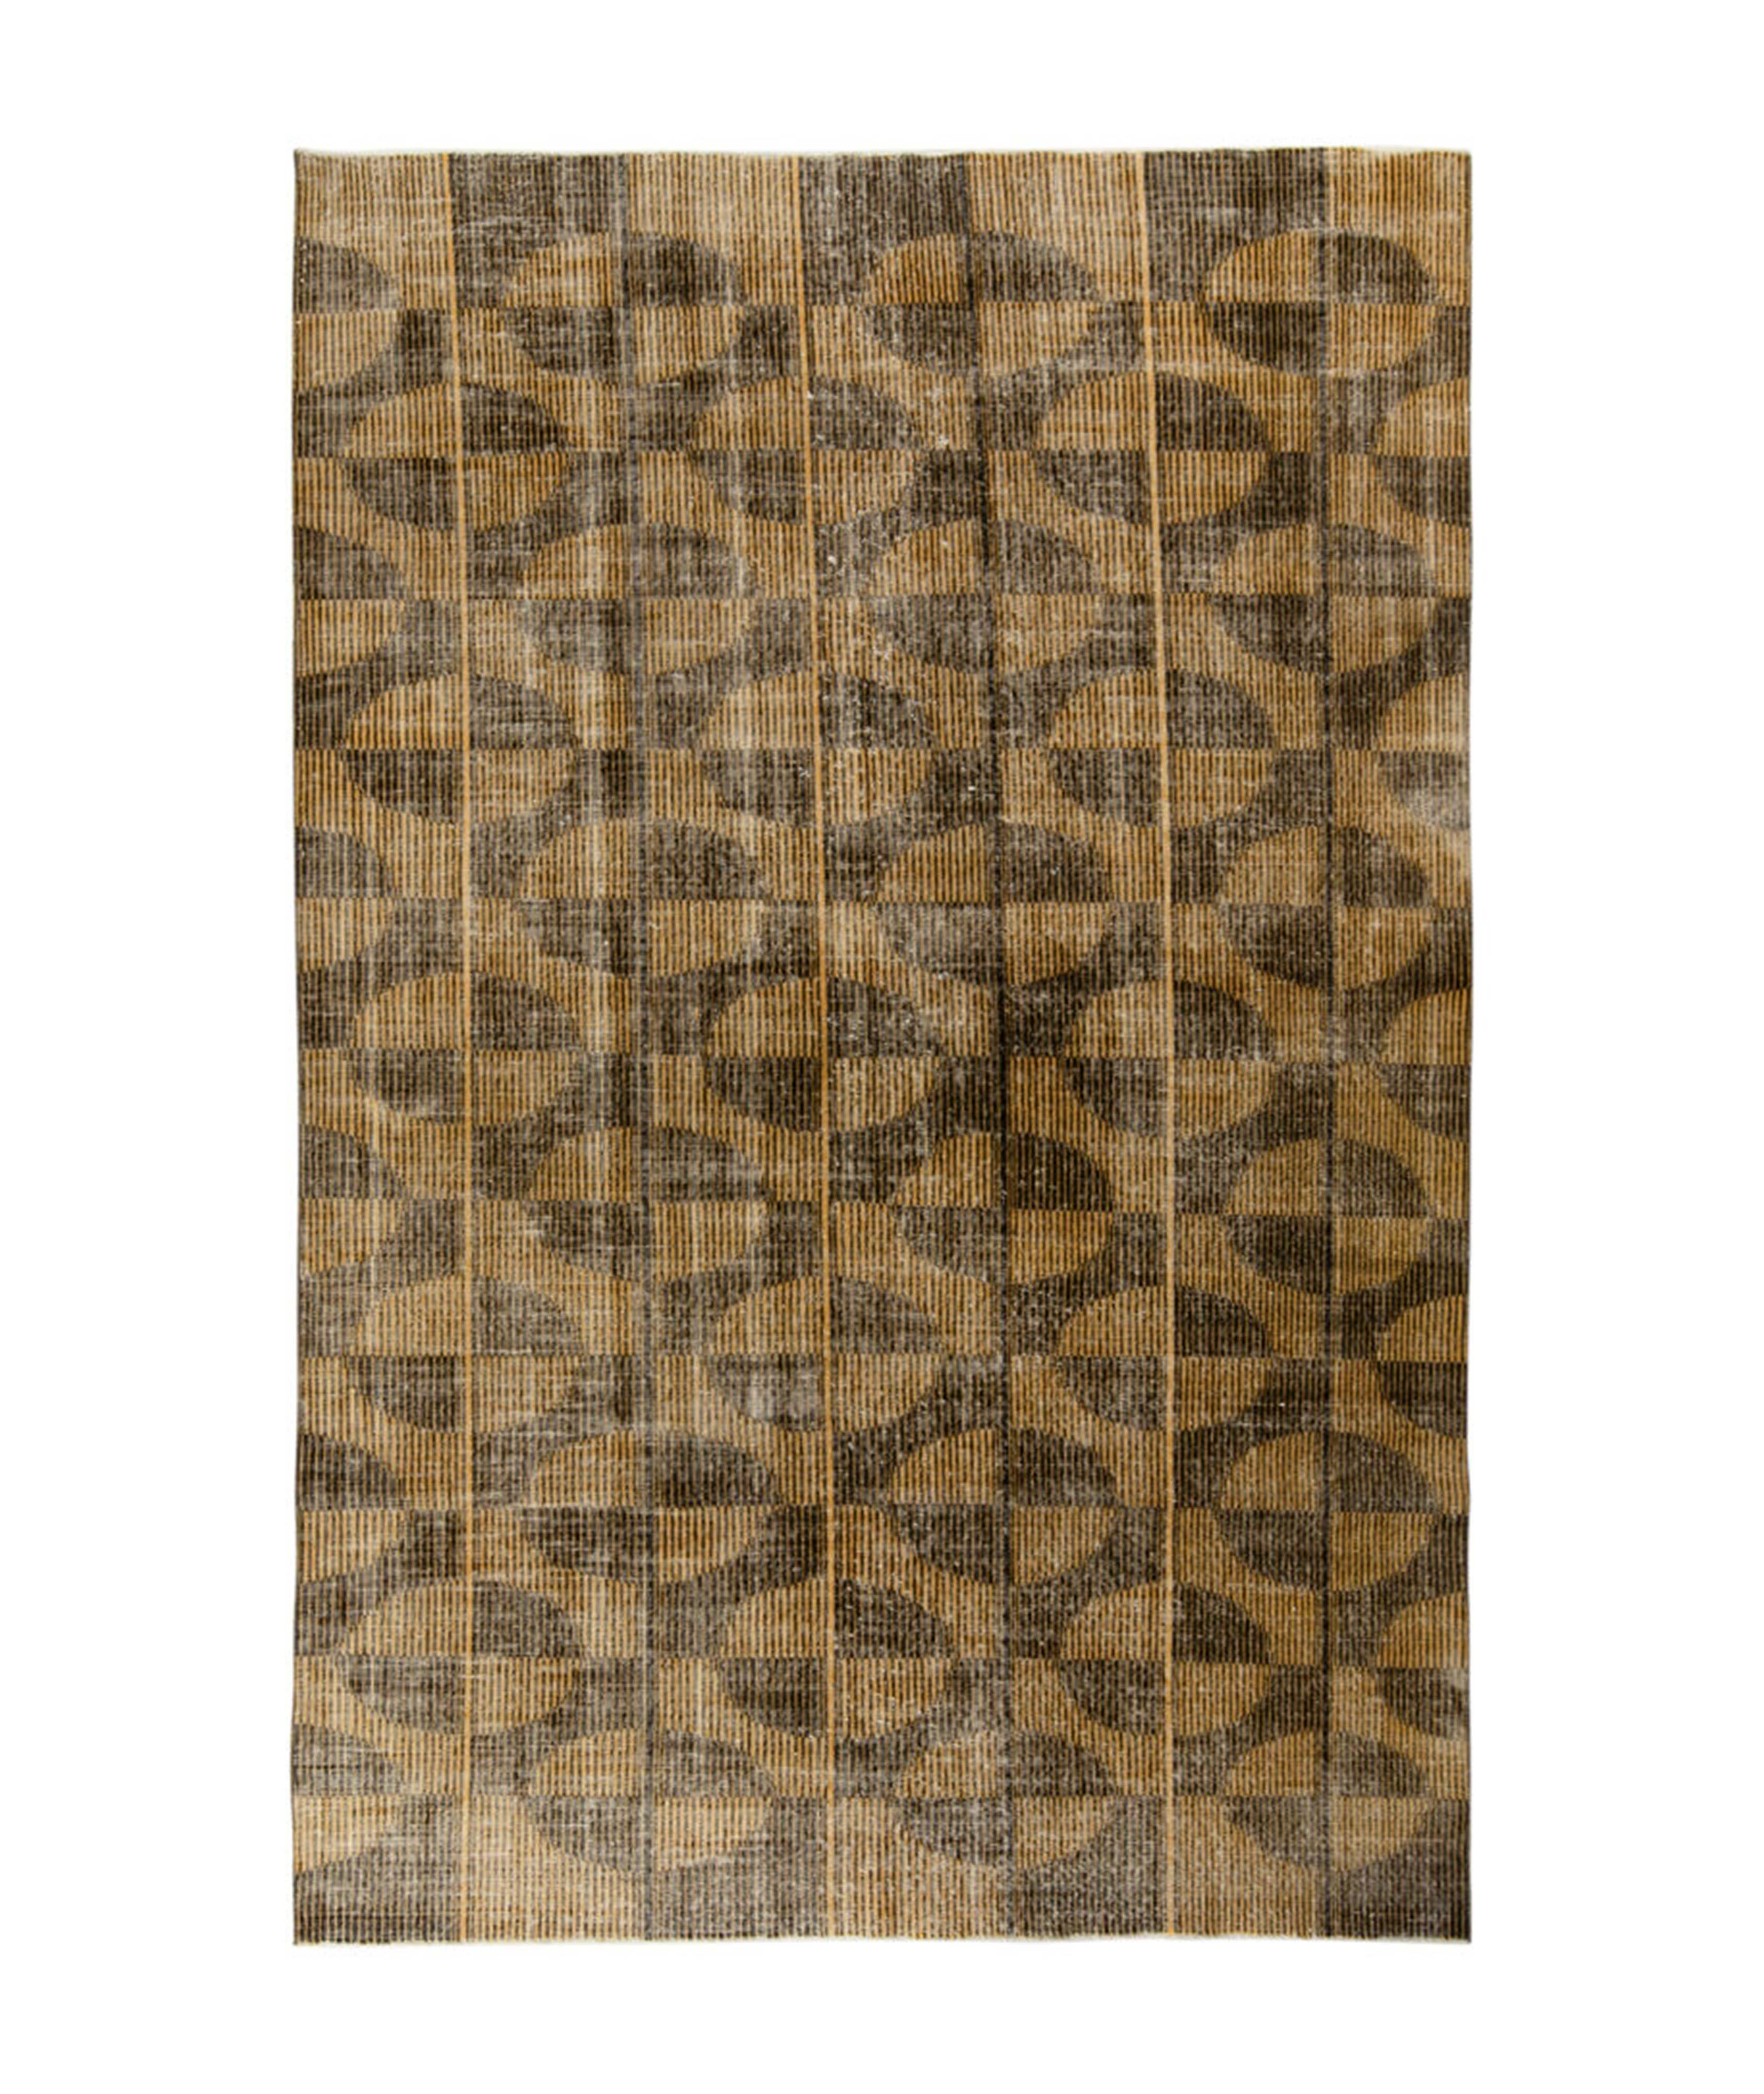 1960s Vintage Distressed Zeki Müren Geometric Pattern Rug image 0